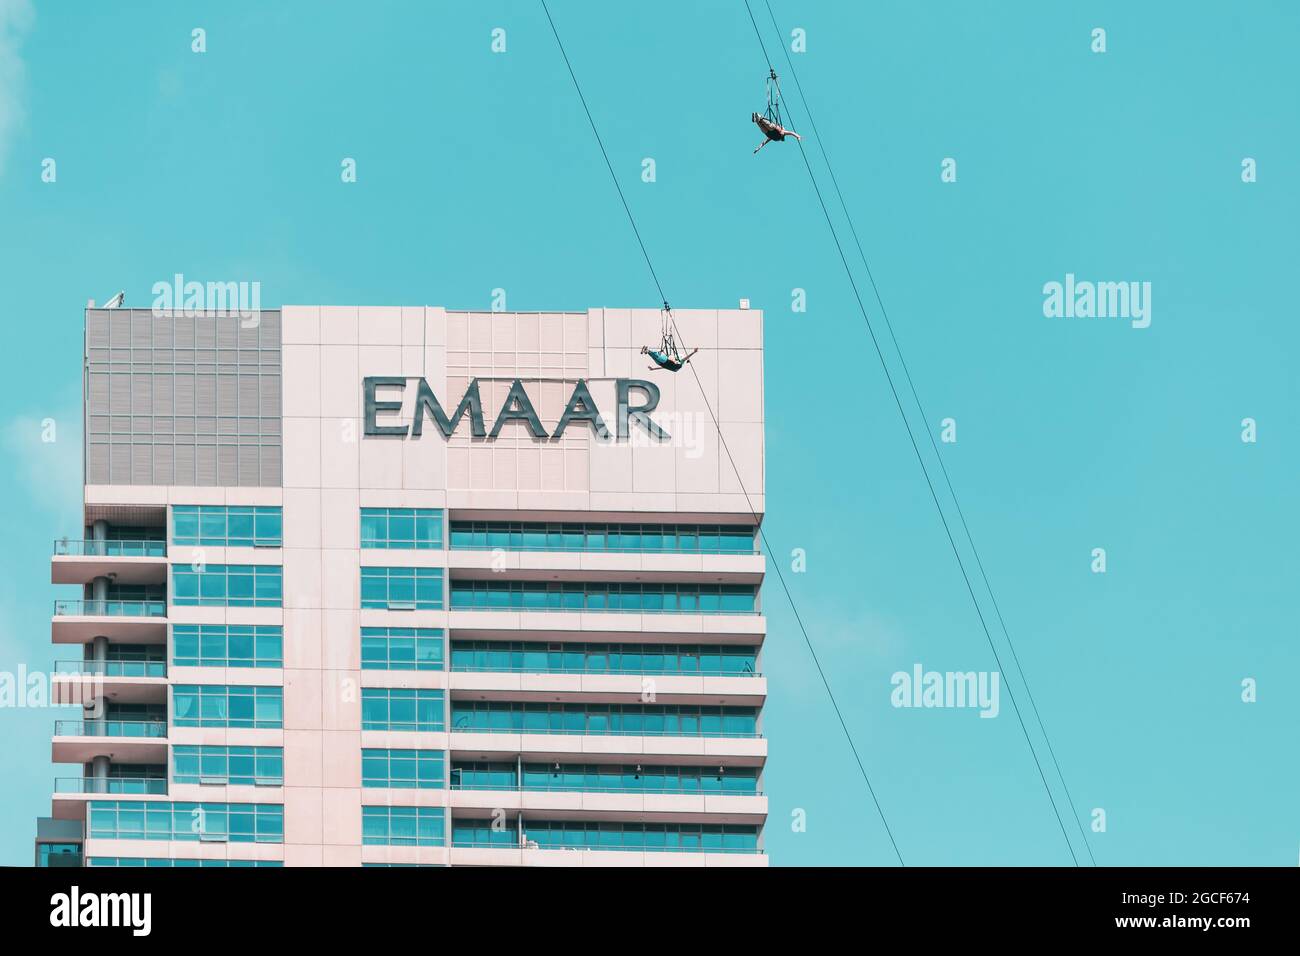 26 de febrero de 2021, Emiratos Árabes Unidos, Dubai: Dos aventureros vuelan por una cuerda de tirolina en un vuelo extremo en Dubai Marina contra el logotipo de Emaar Foto de stock